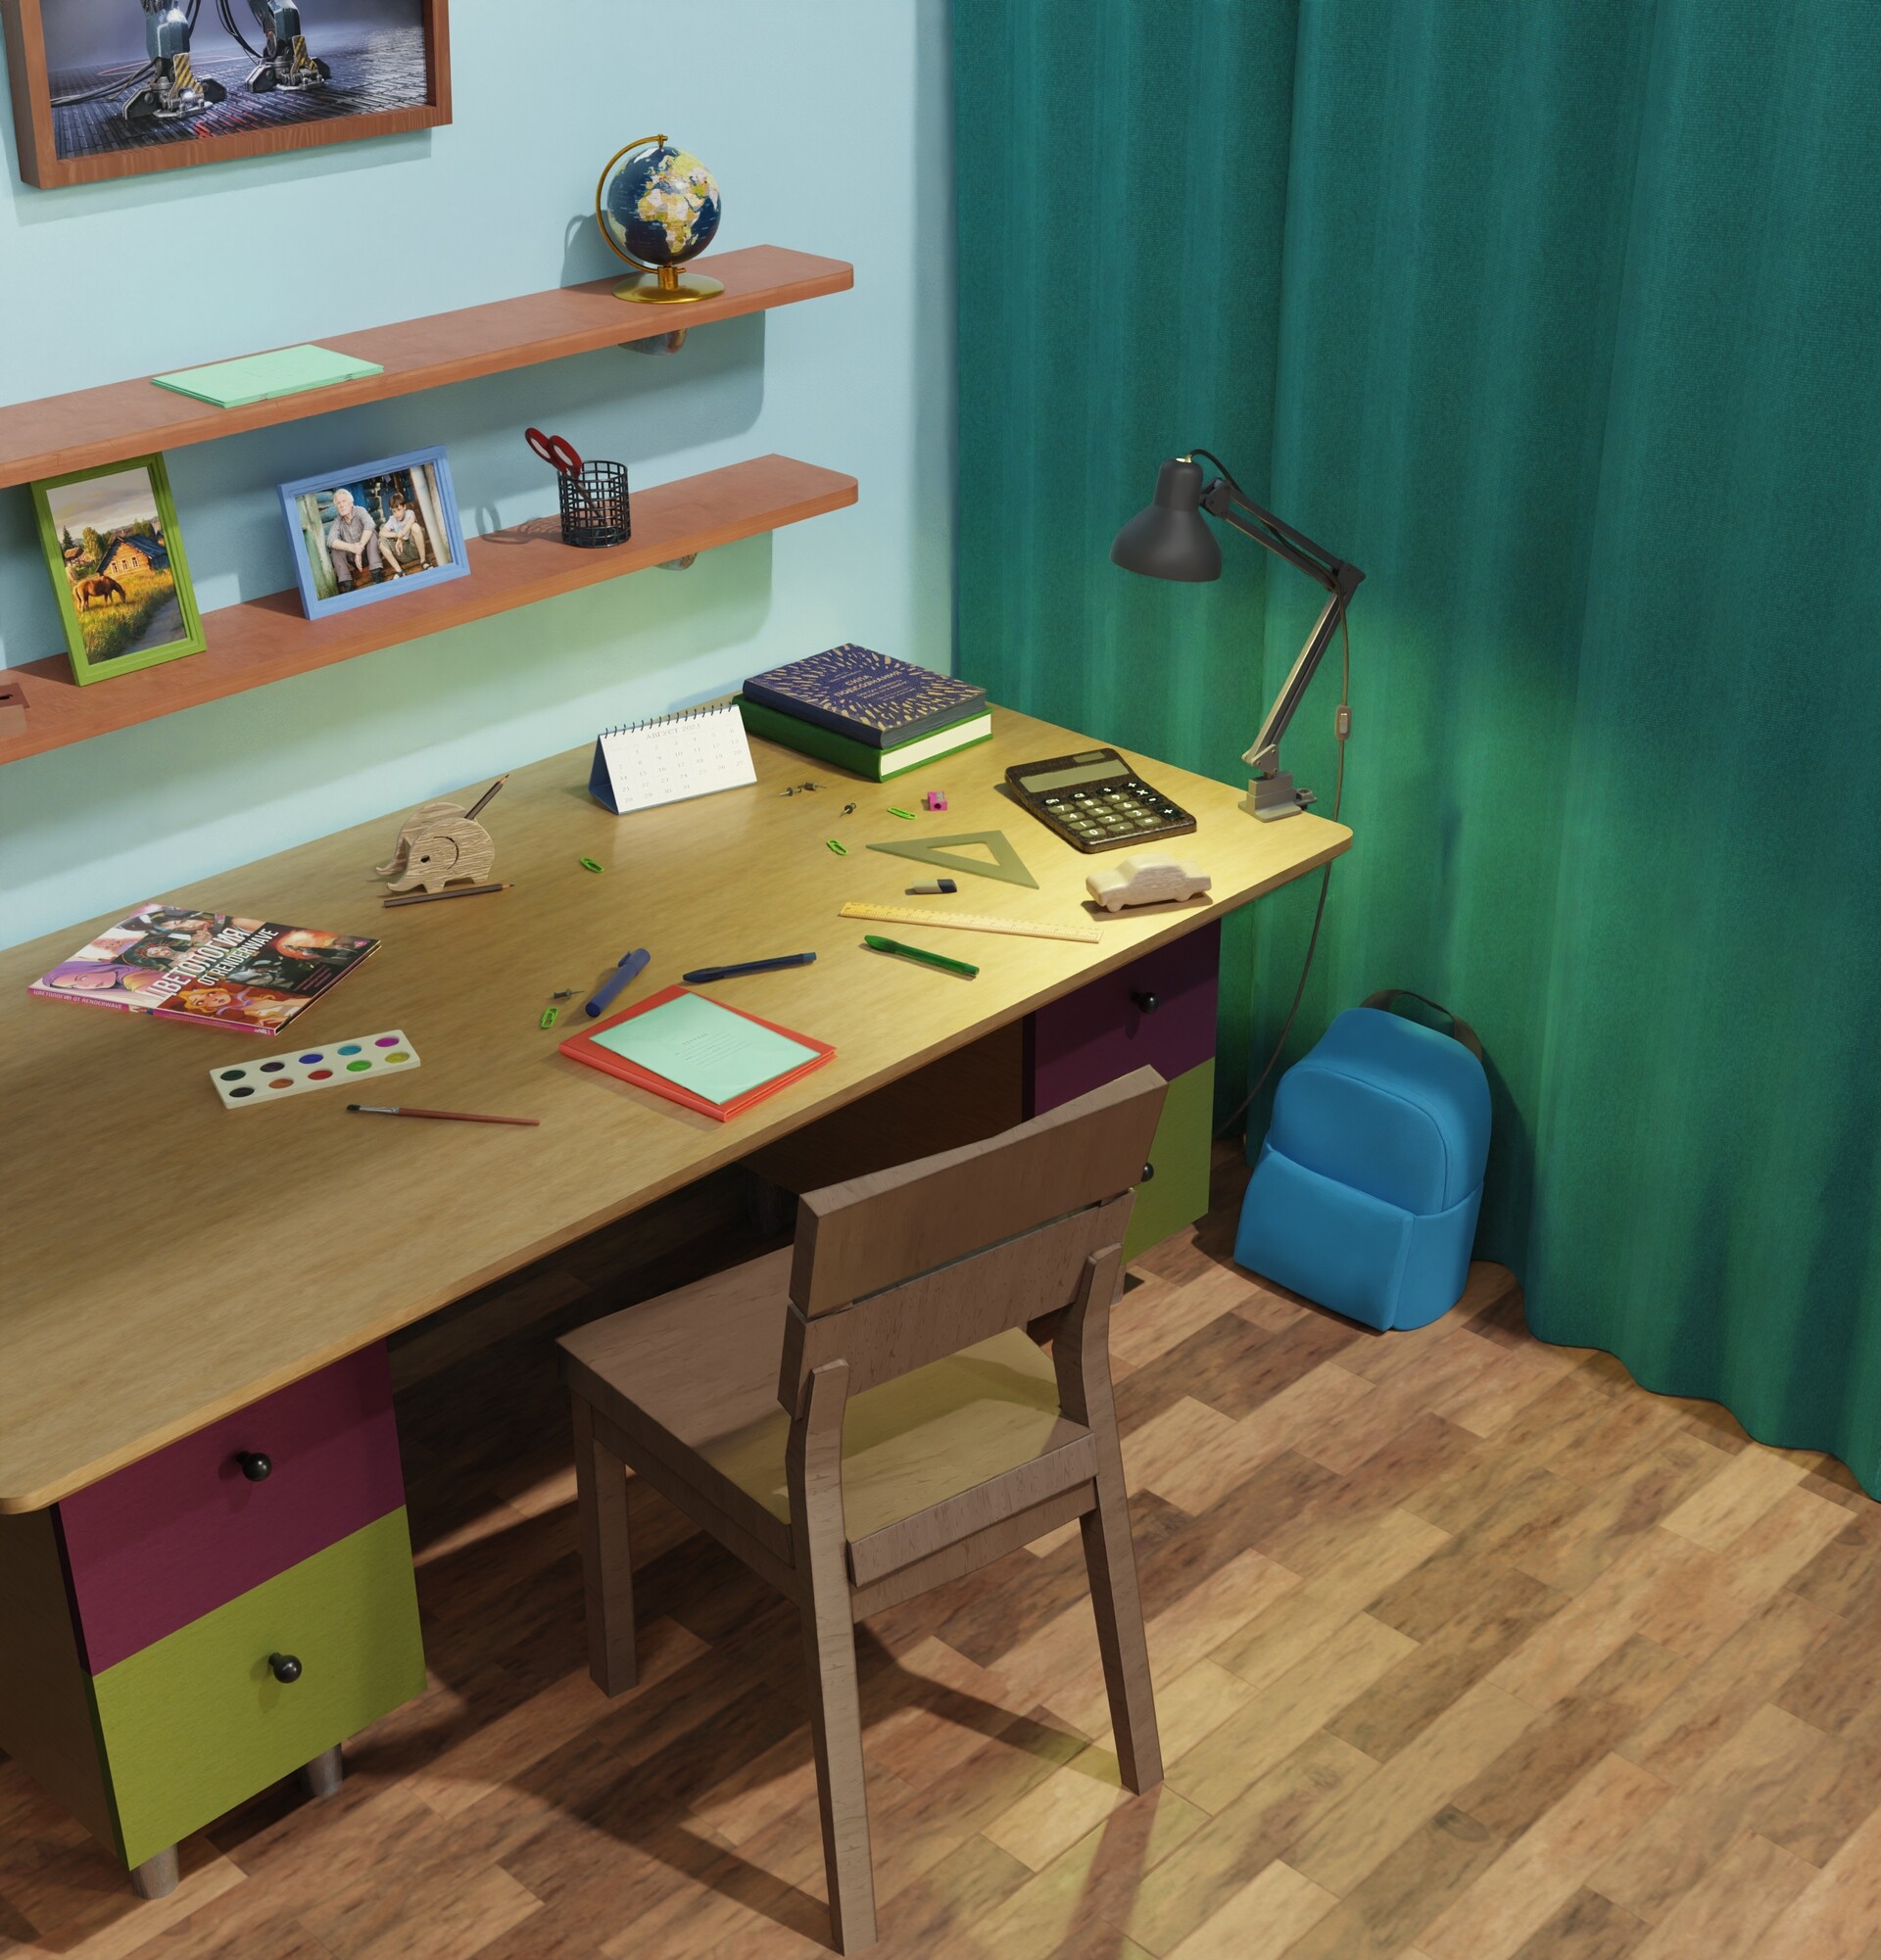 ArtStation - Student's room